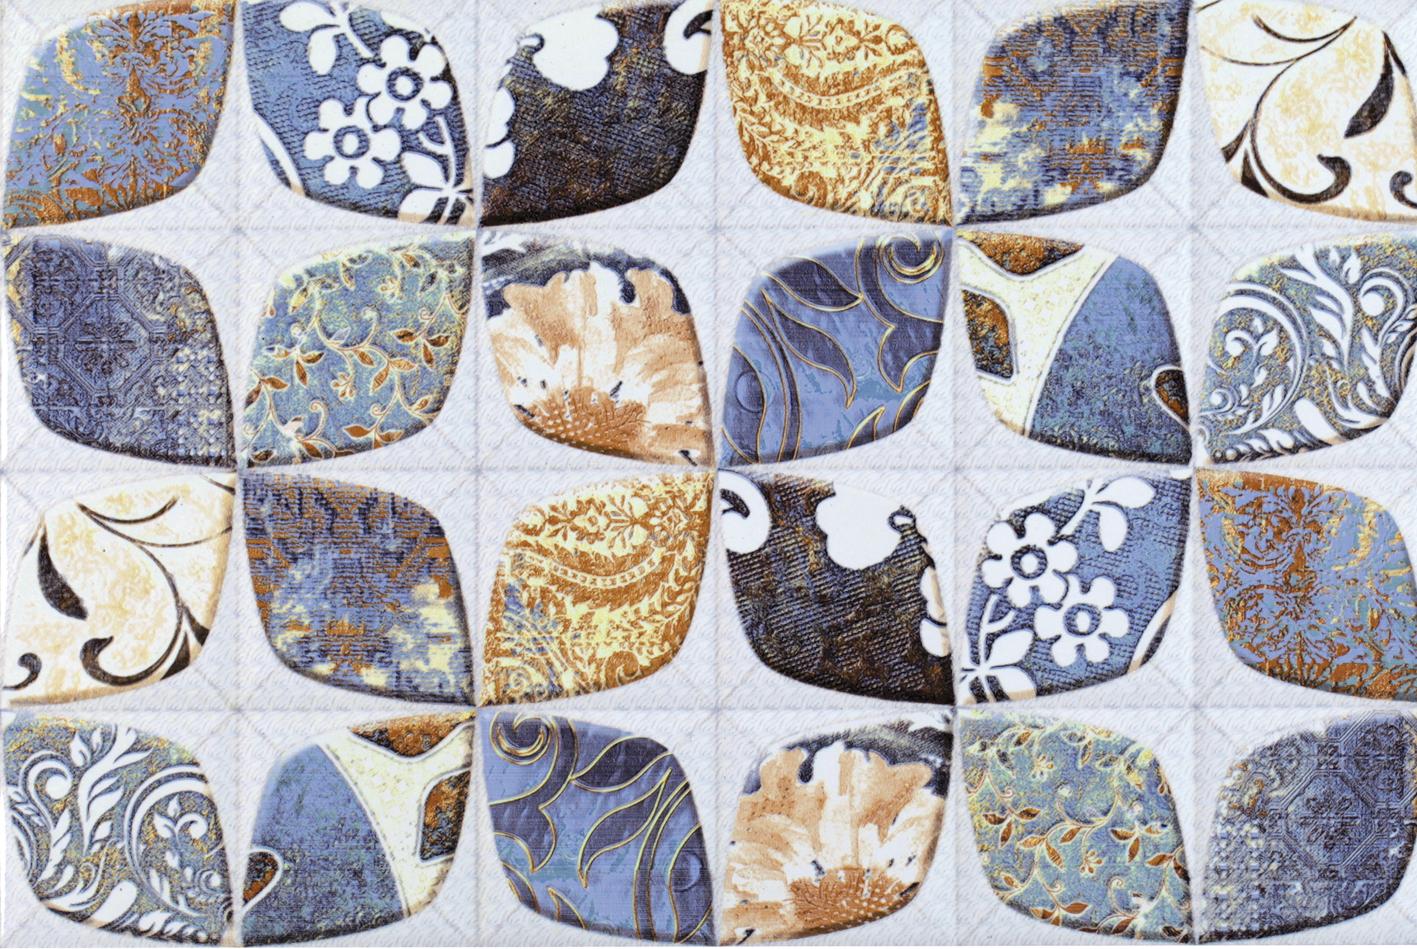 Blue Tiles for Bathroom Tiles, Kitchen Tiles, Accent Tiles